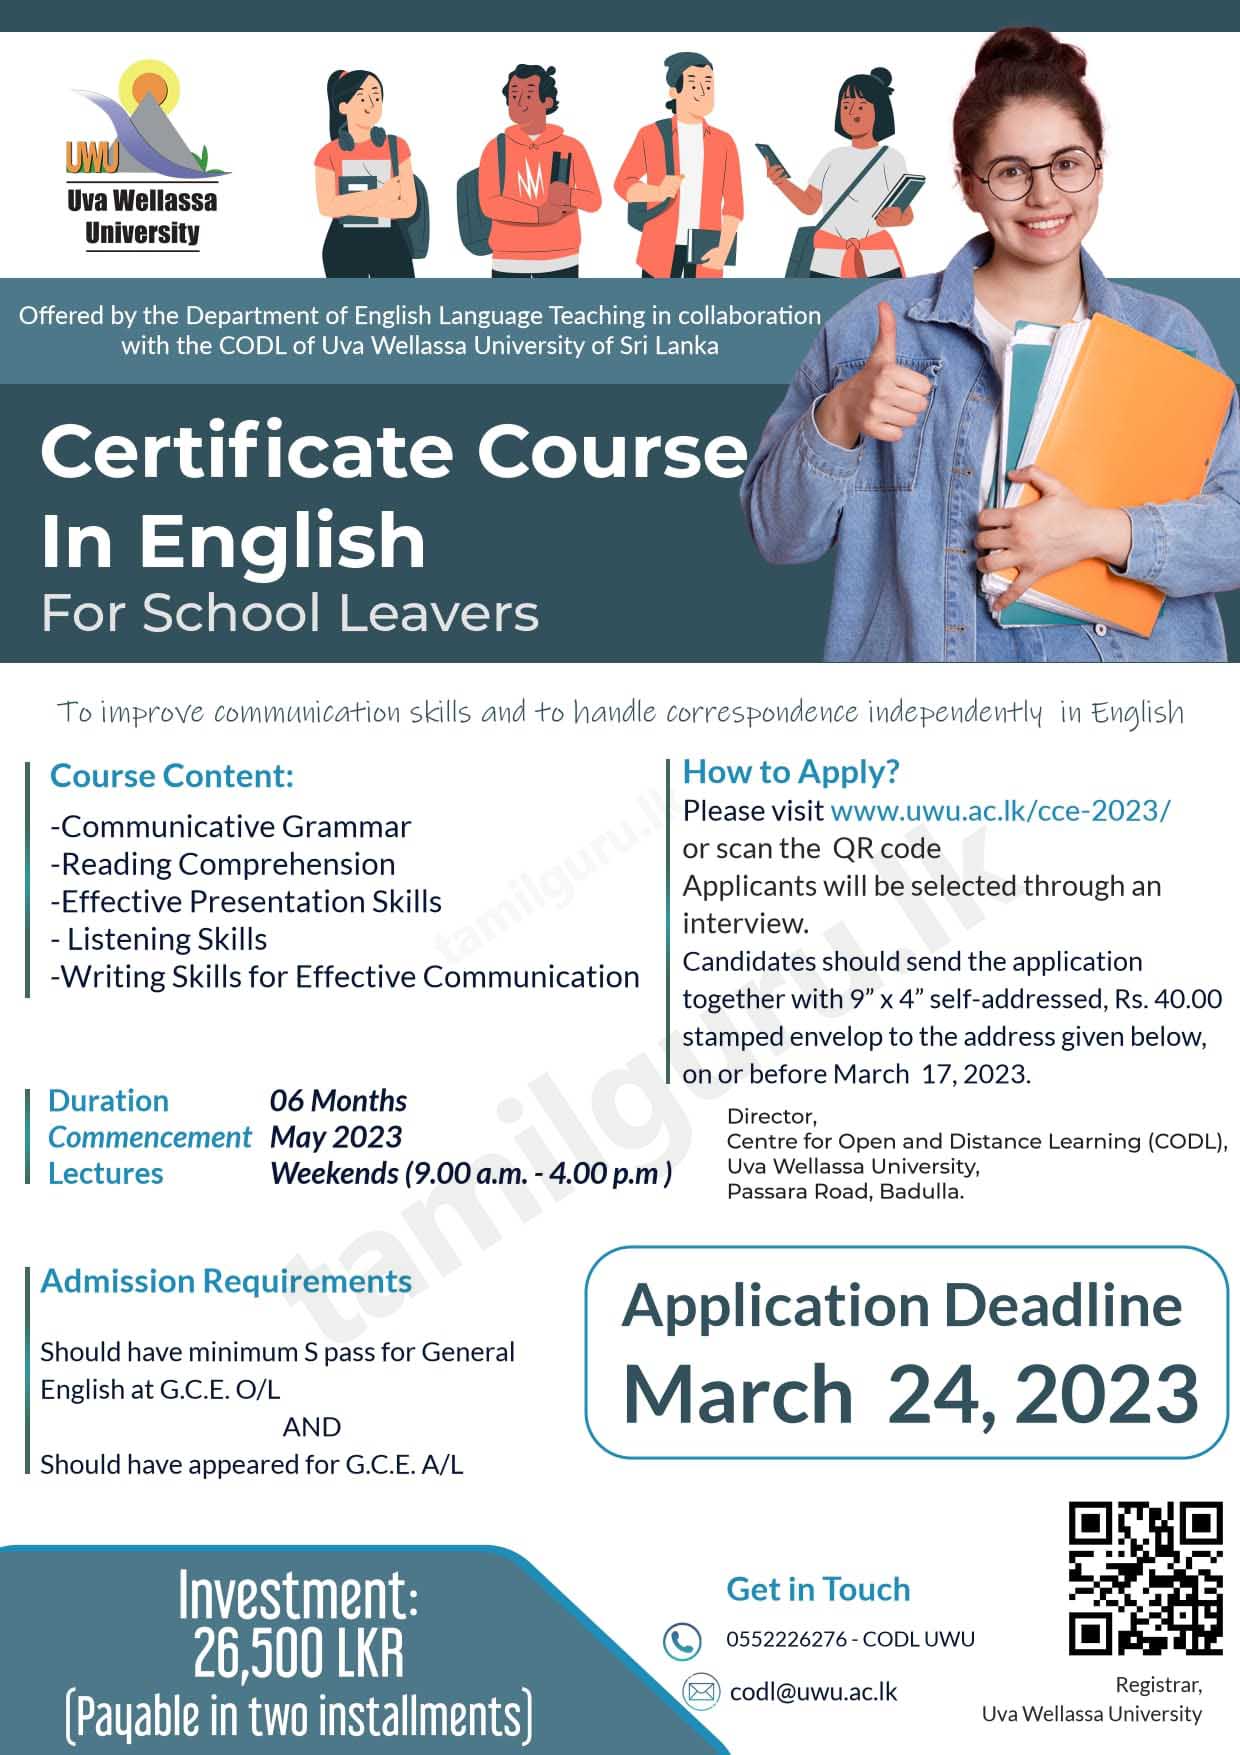 Certificate Course in English for School Leavers 2023 - Uva Wellassa University